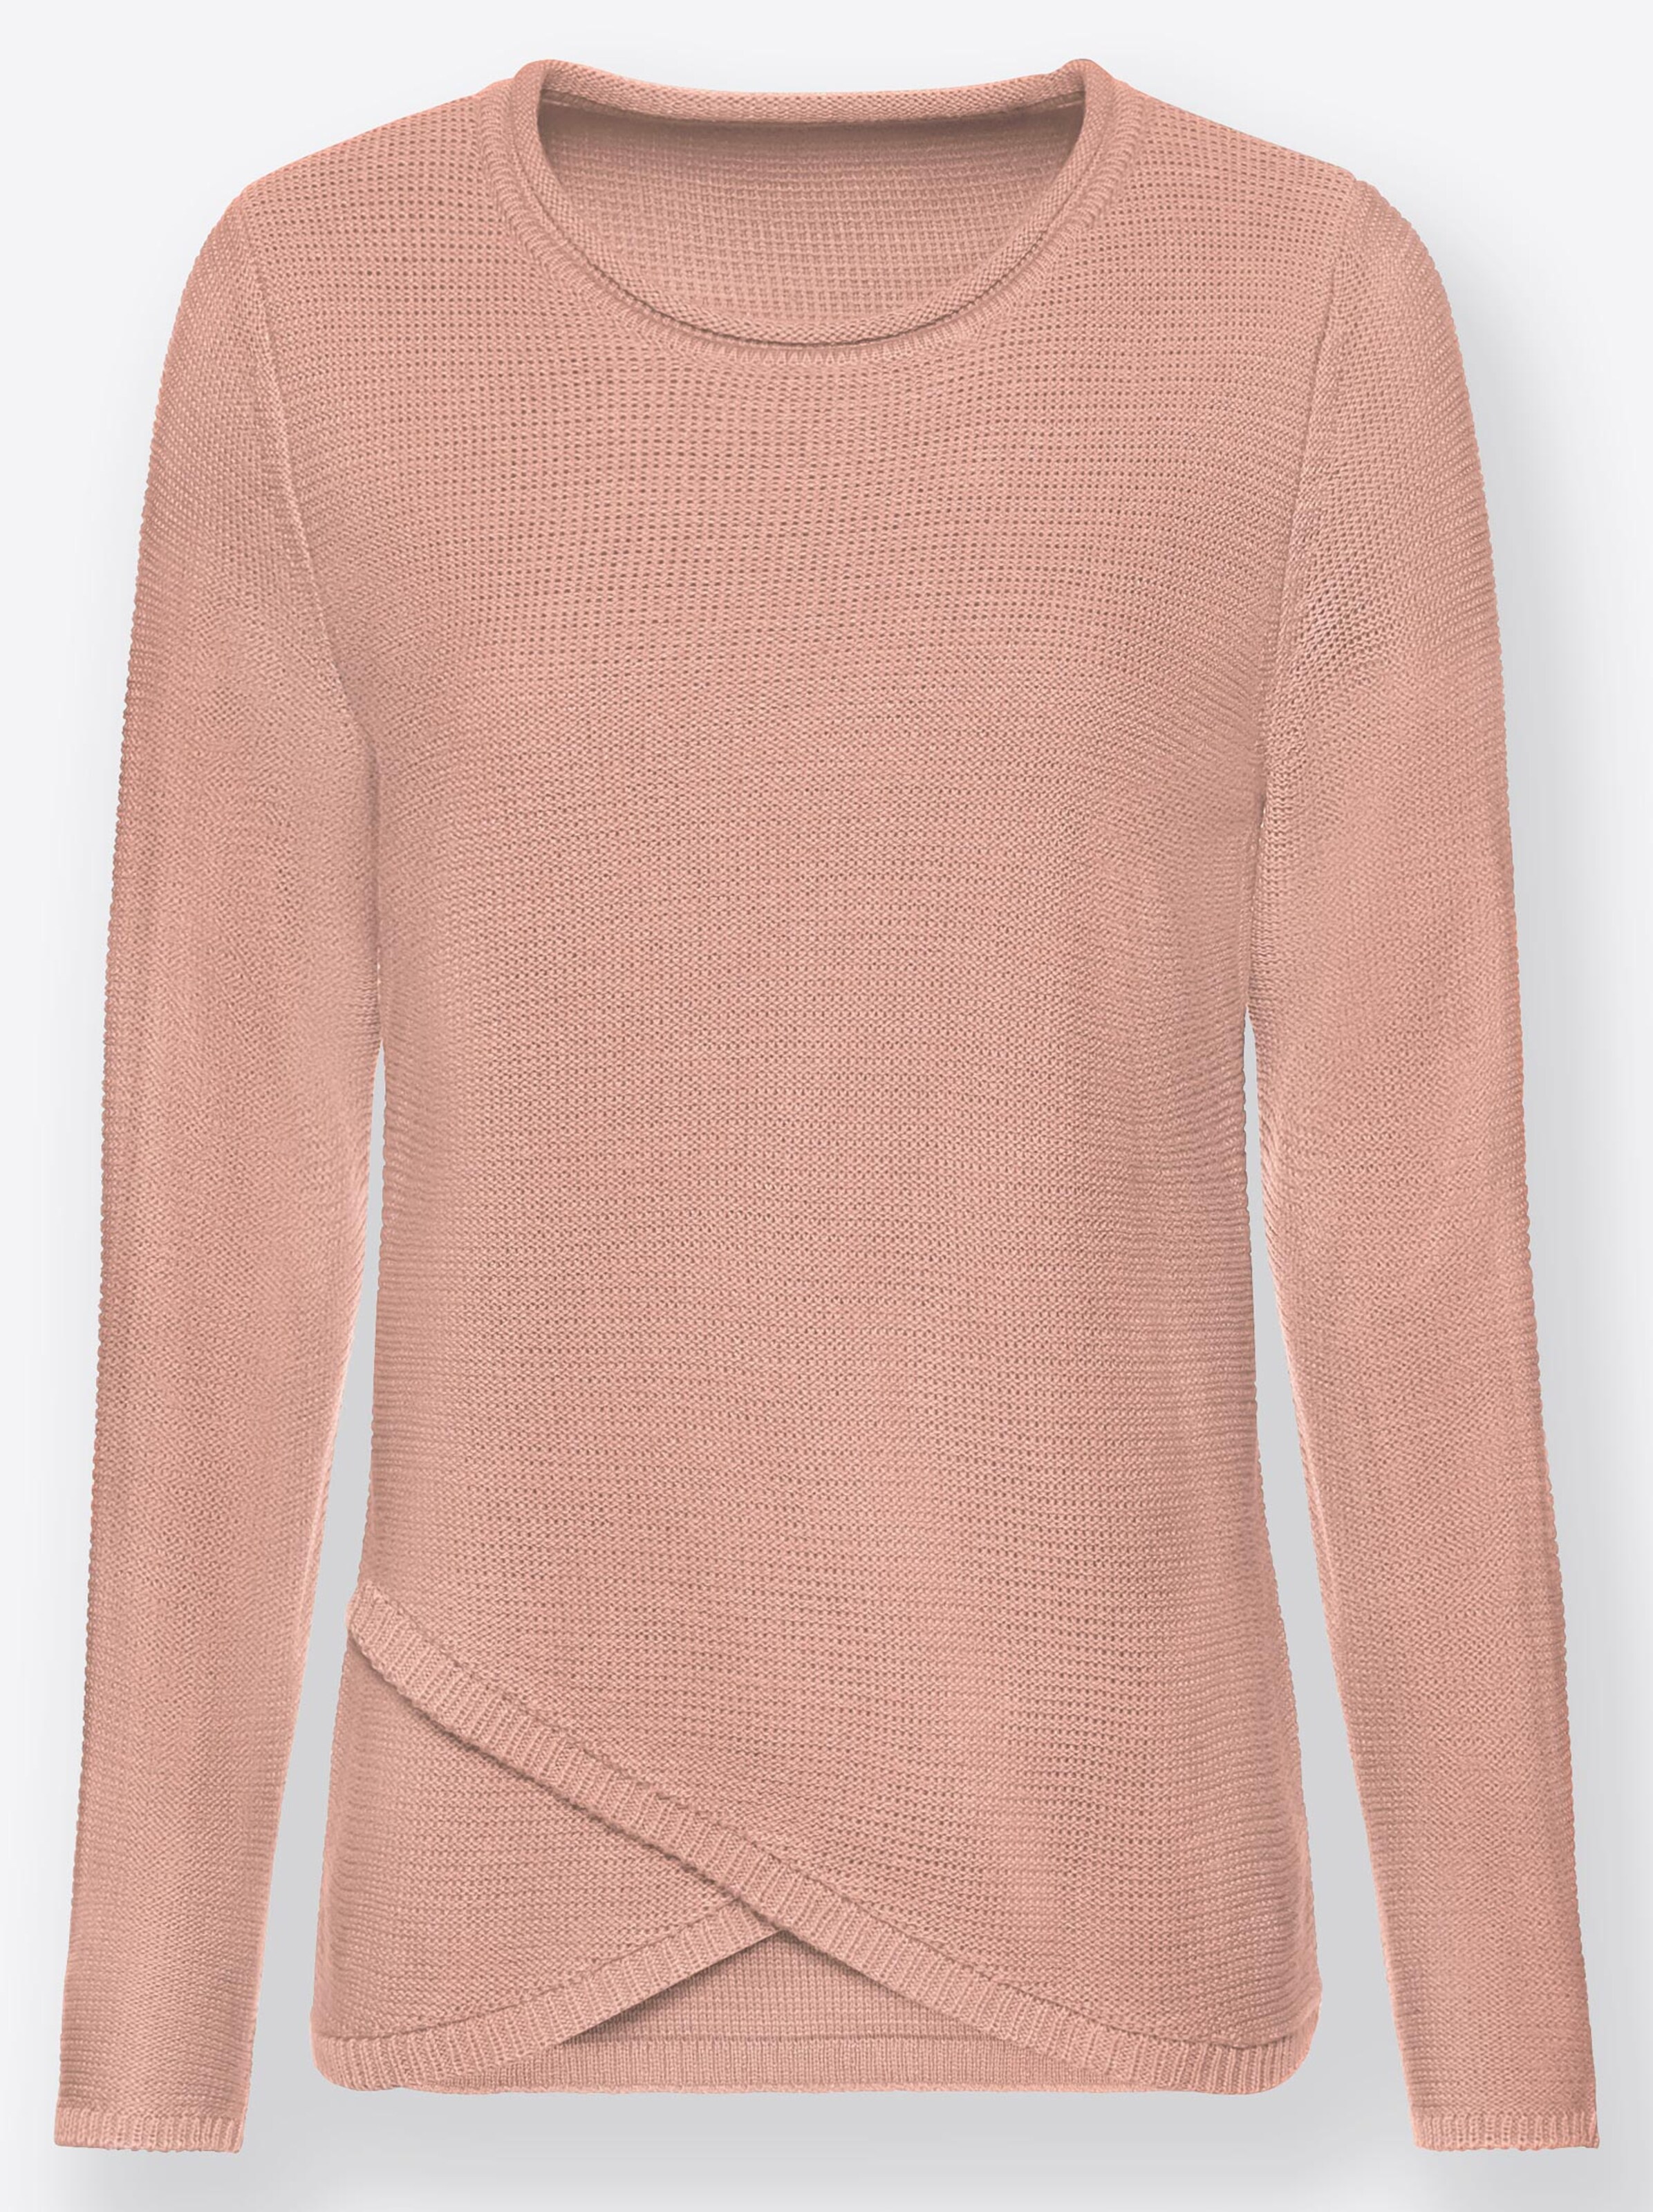 Damenmode Pullover Langarm-Pullover in rosé 